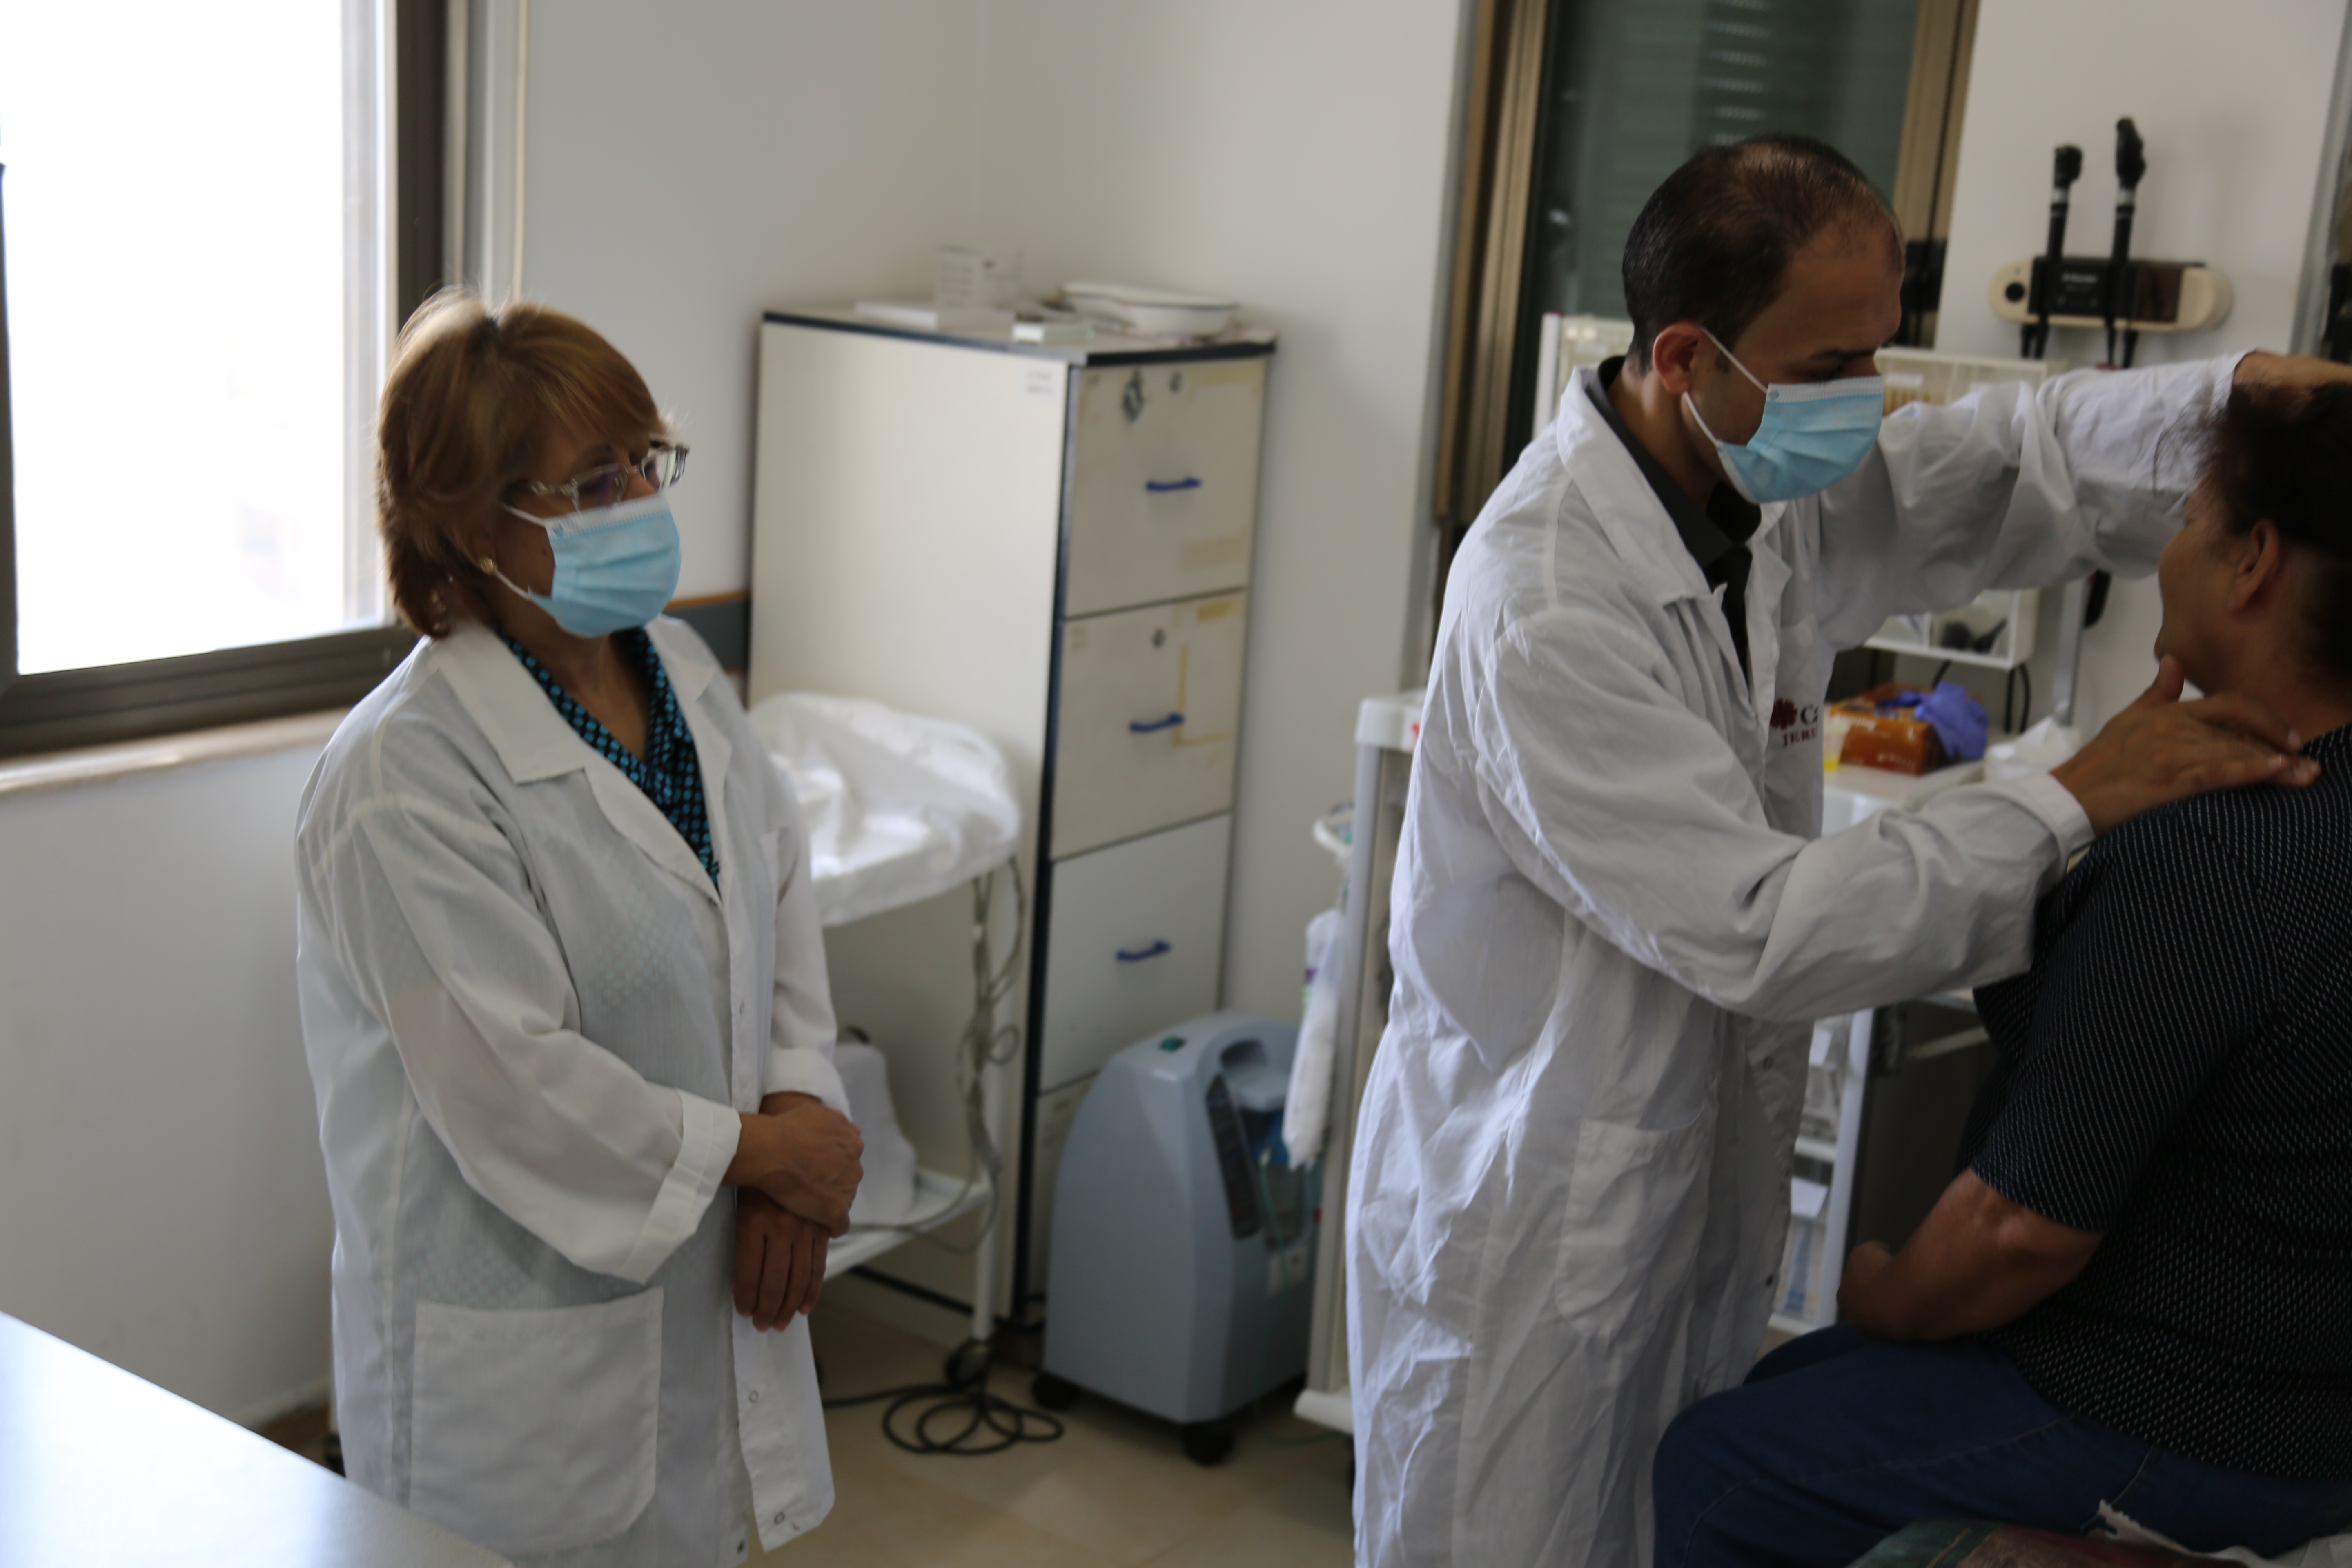  treatment at the Taybeh clinic photo: Caritas Polska